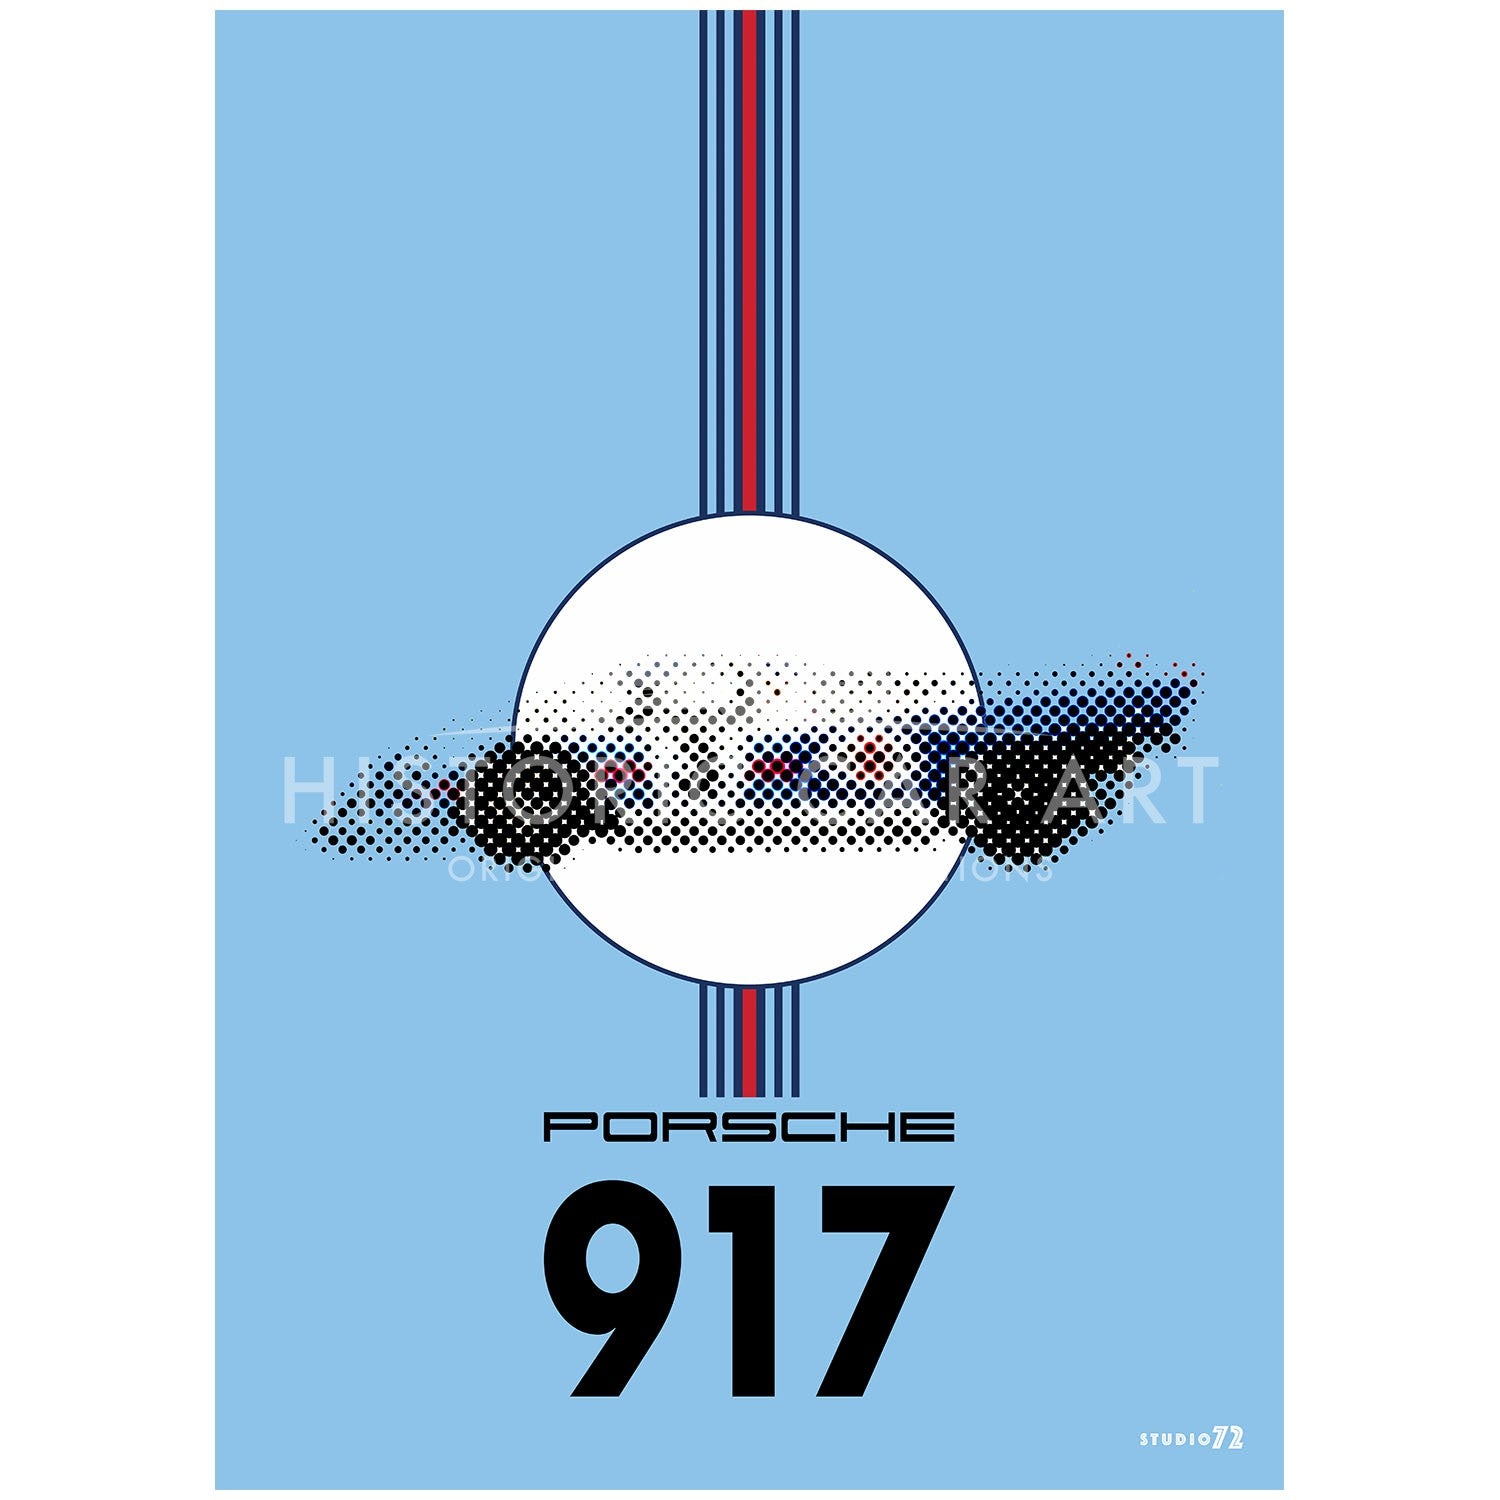 1971 Martini Porsche 917 | Poster